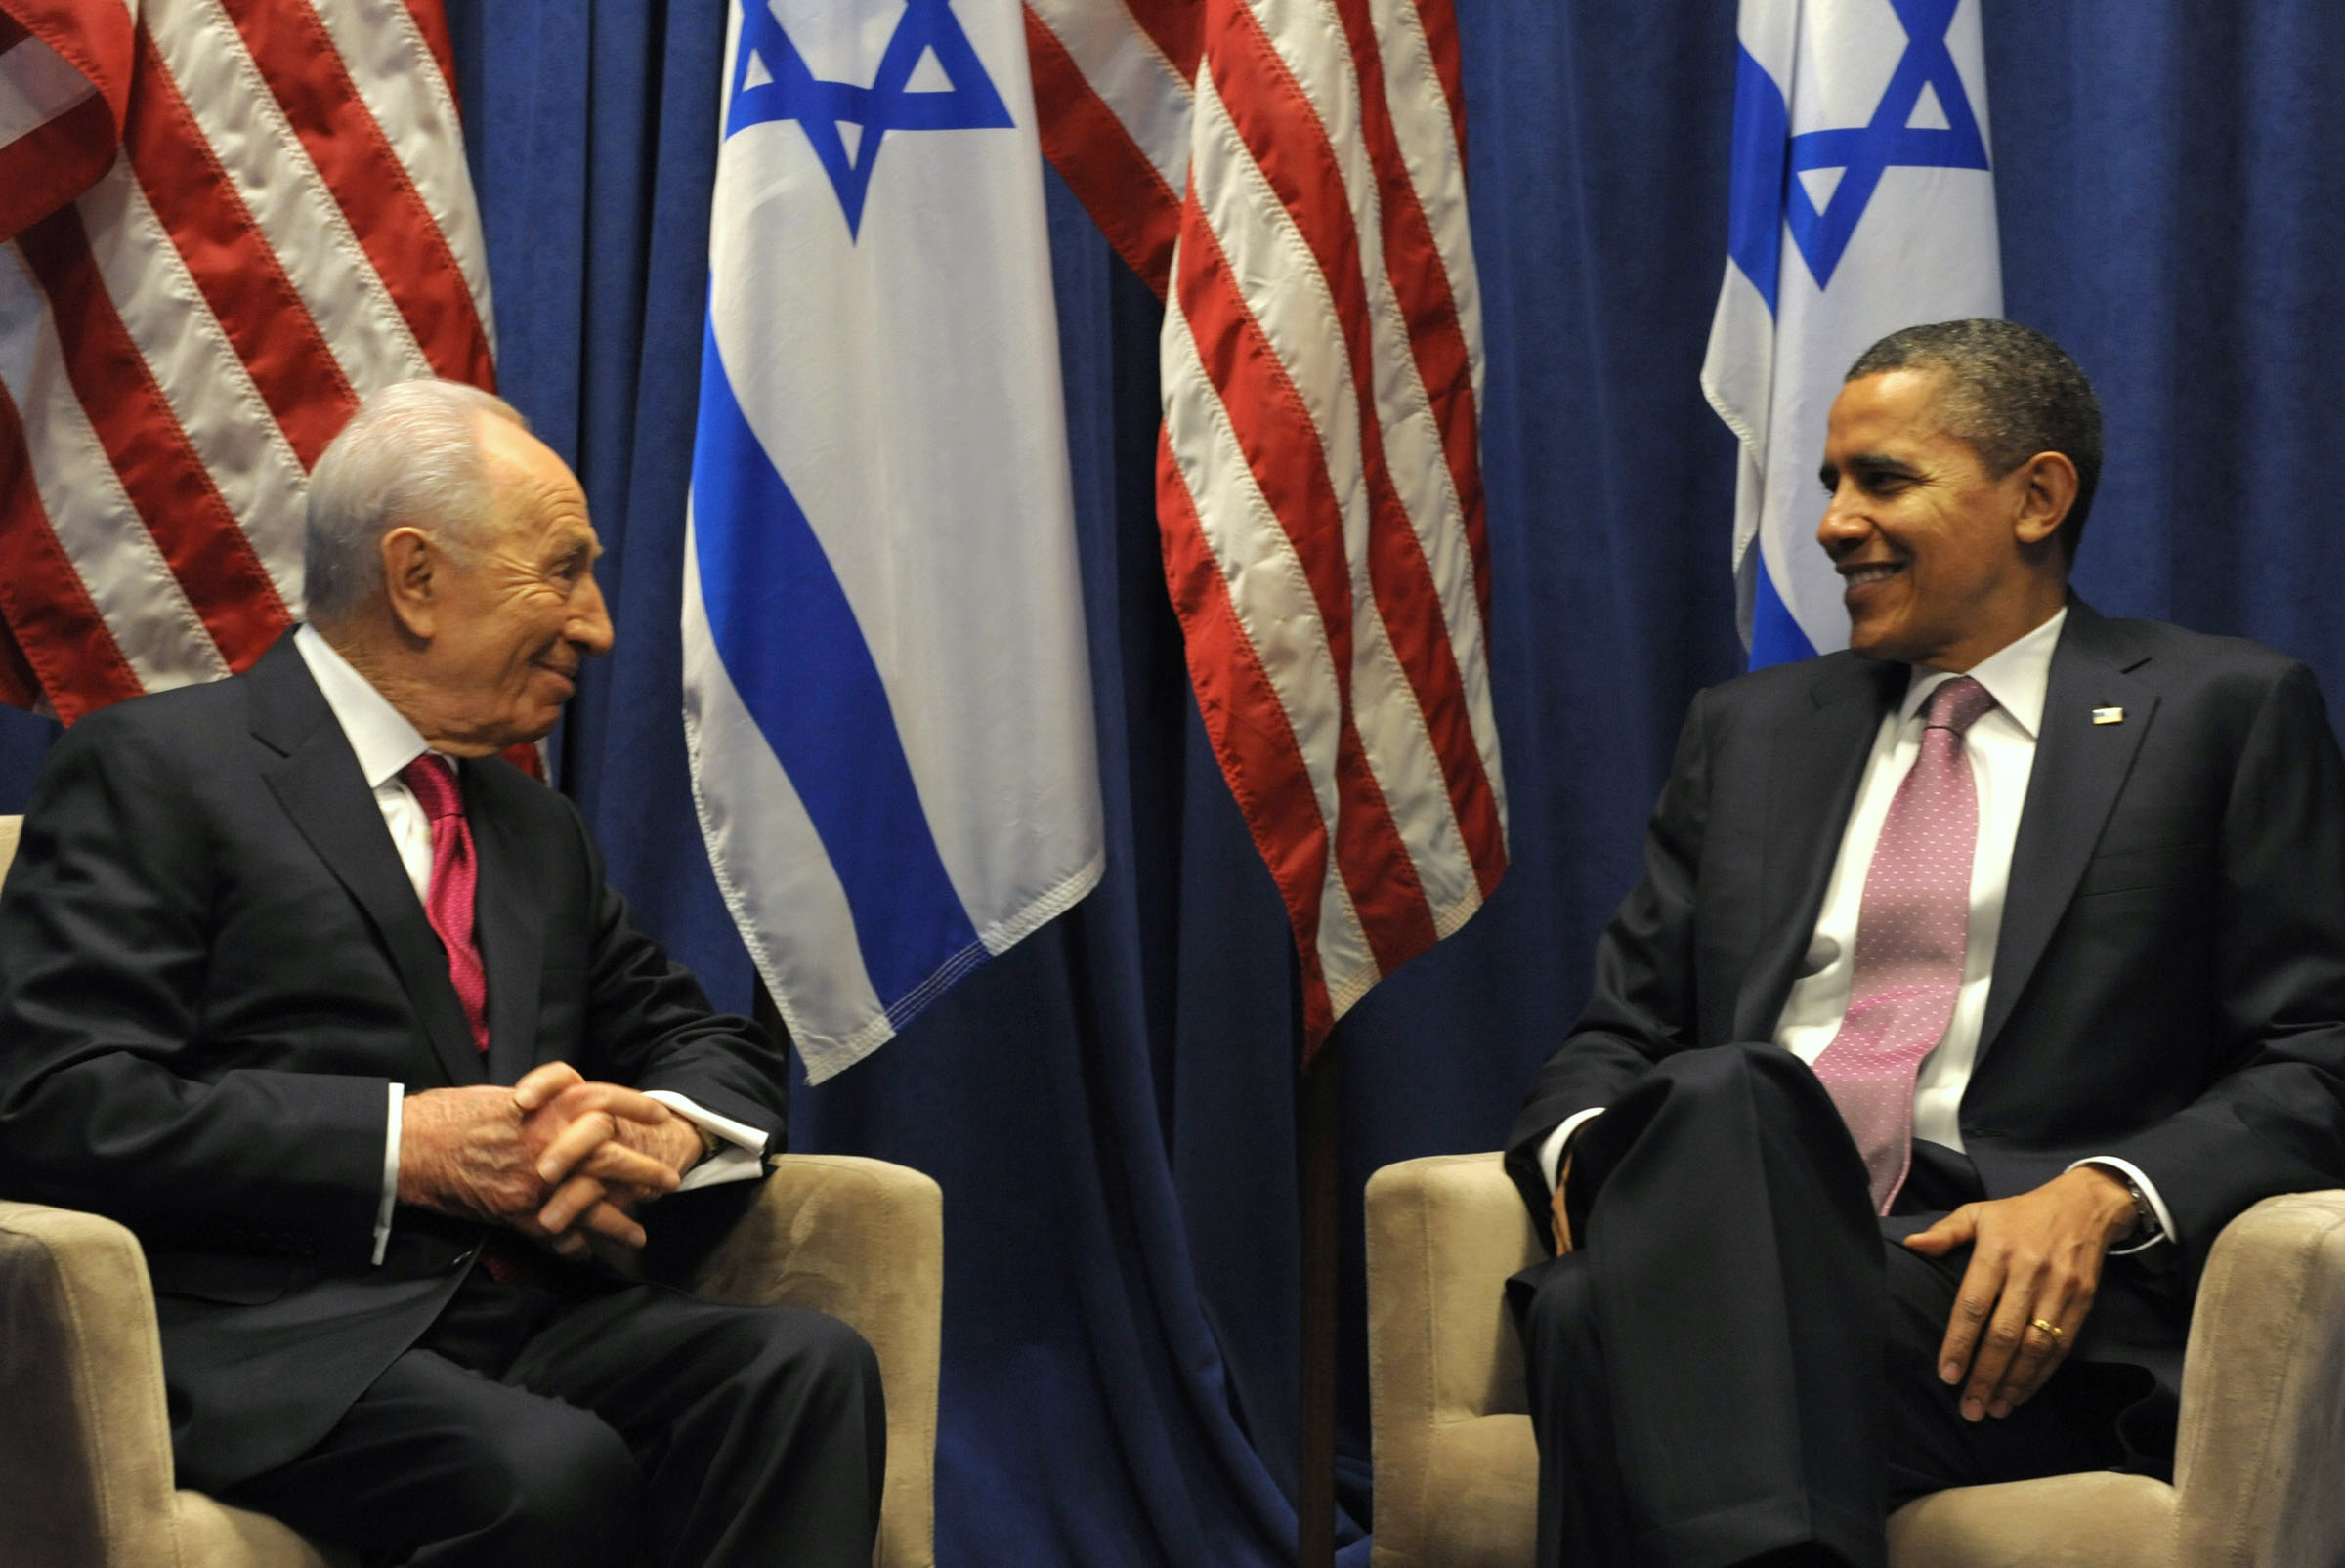 Benjamin Netanyahu, Kärnvapen, Krig, Israel, USA, Iran, Barack Obama